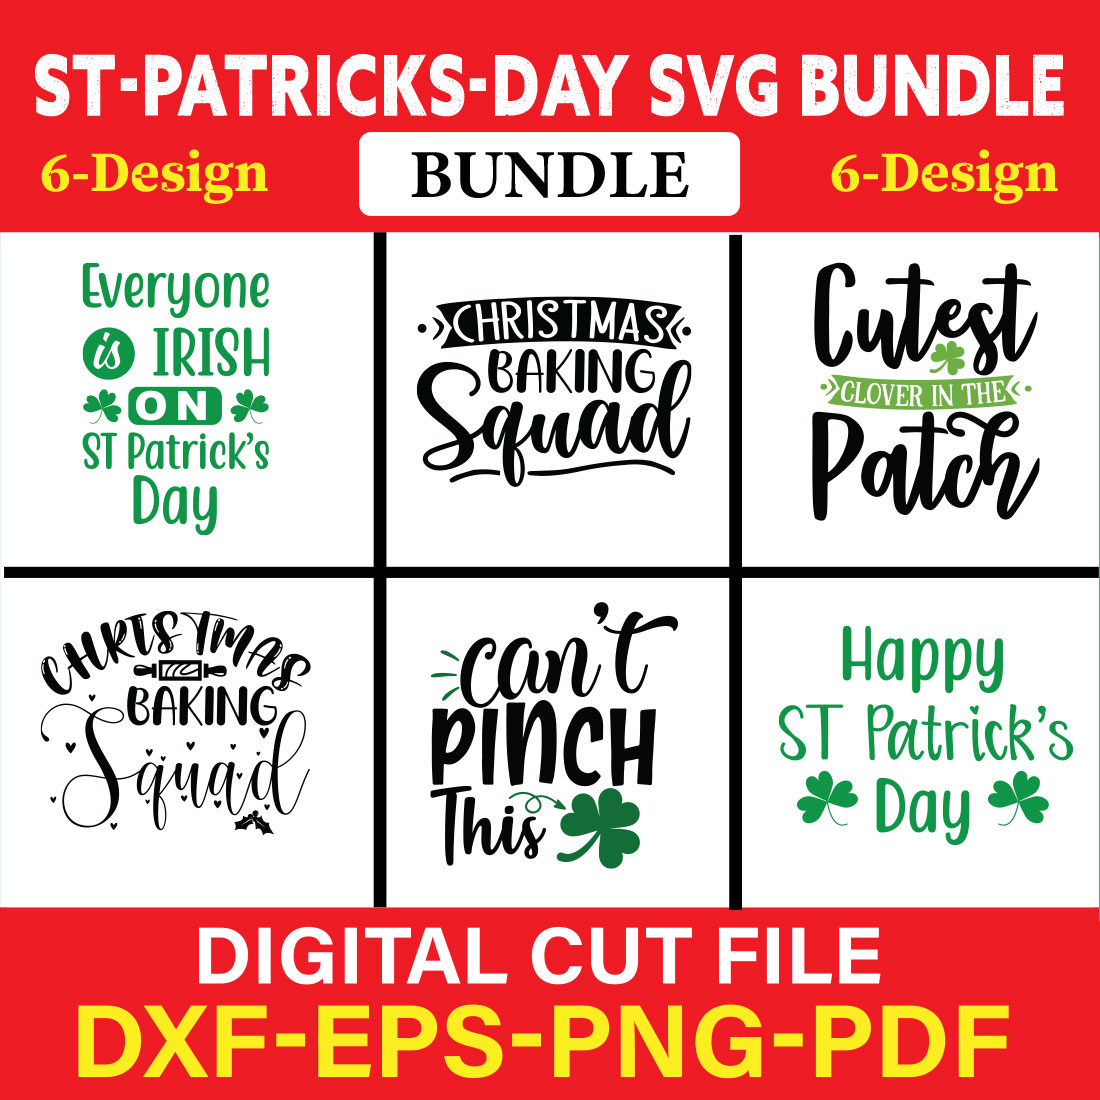 St-Patricks Day T-shirt Design Bundle Vol-1 cover image.